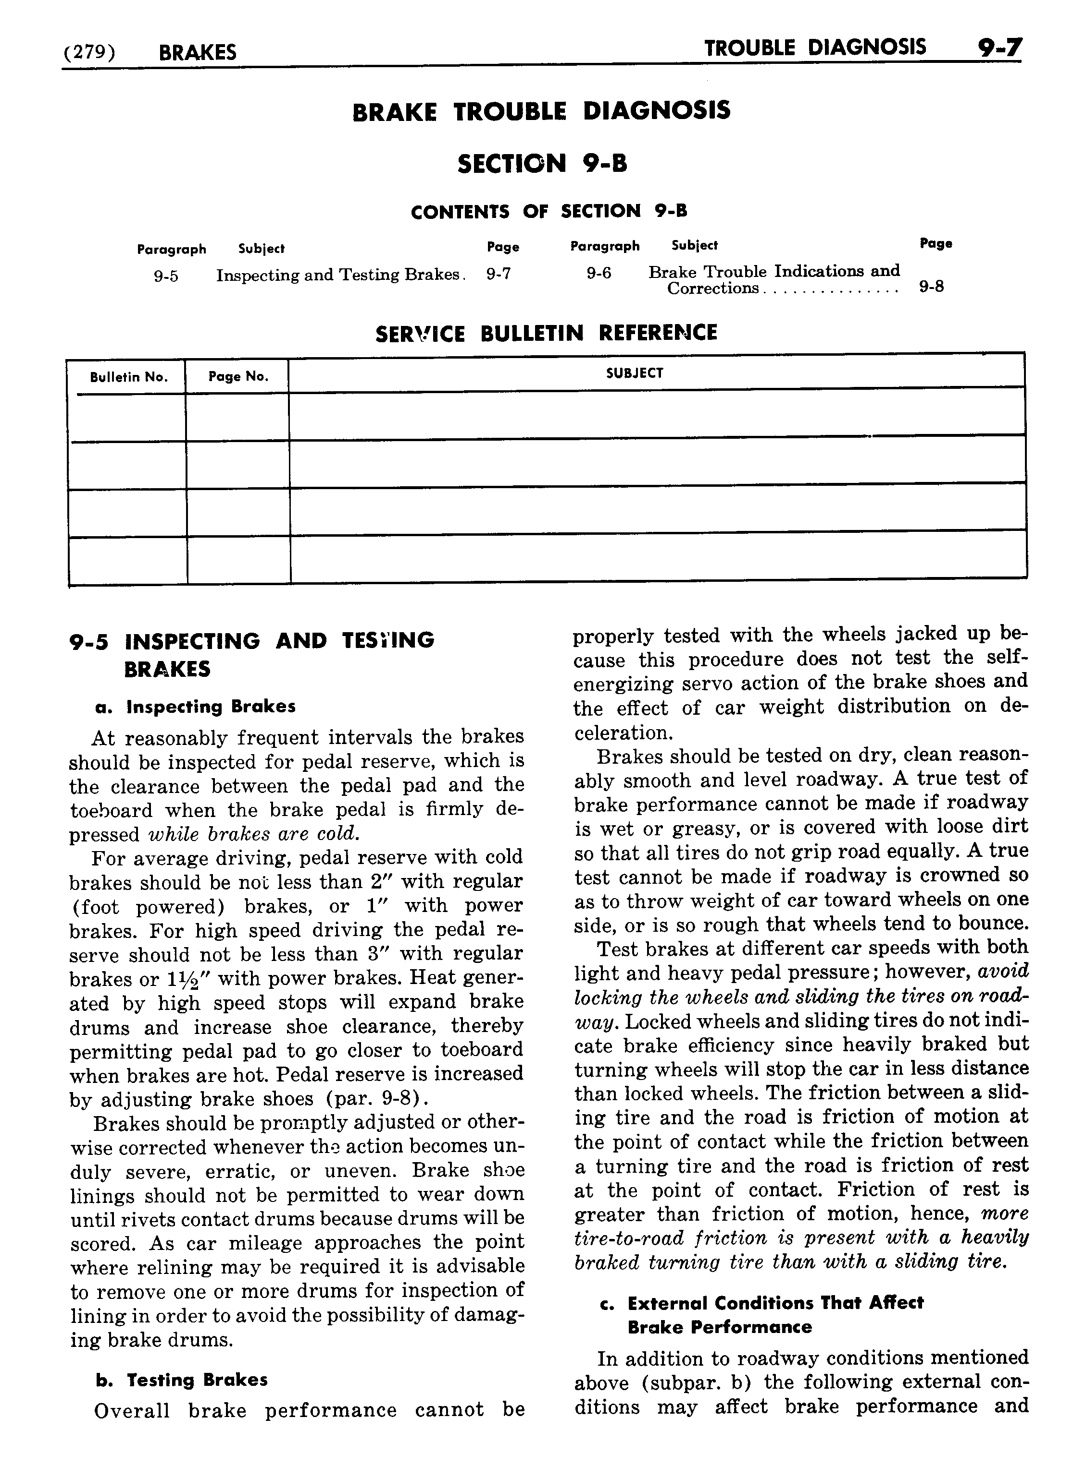 n_10 1955 Buick Shop Manual - Brakes-007-007.jpg